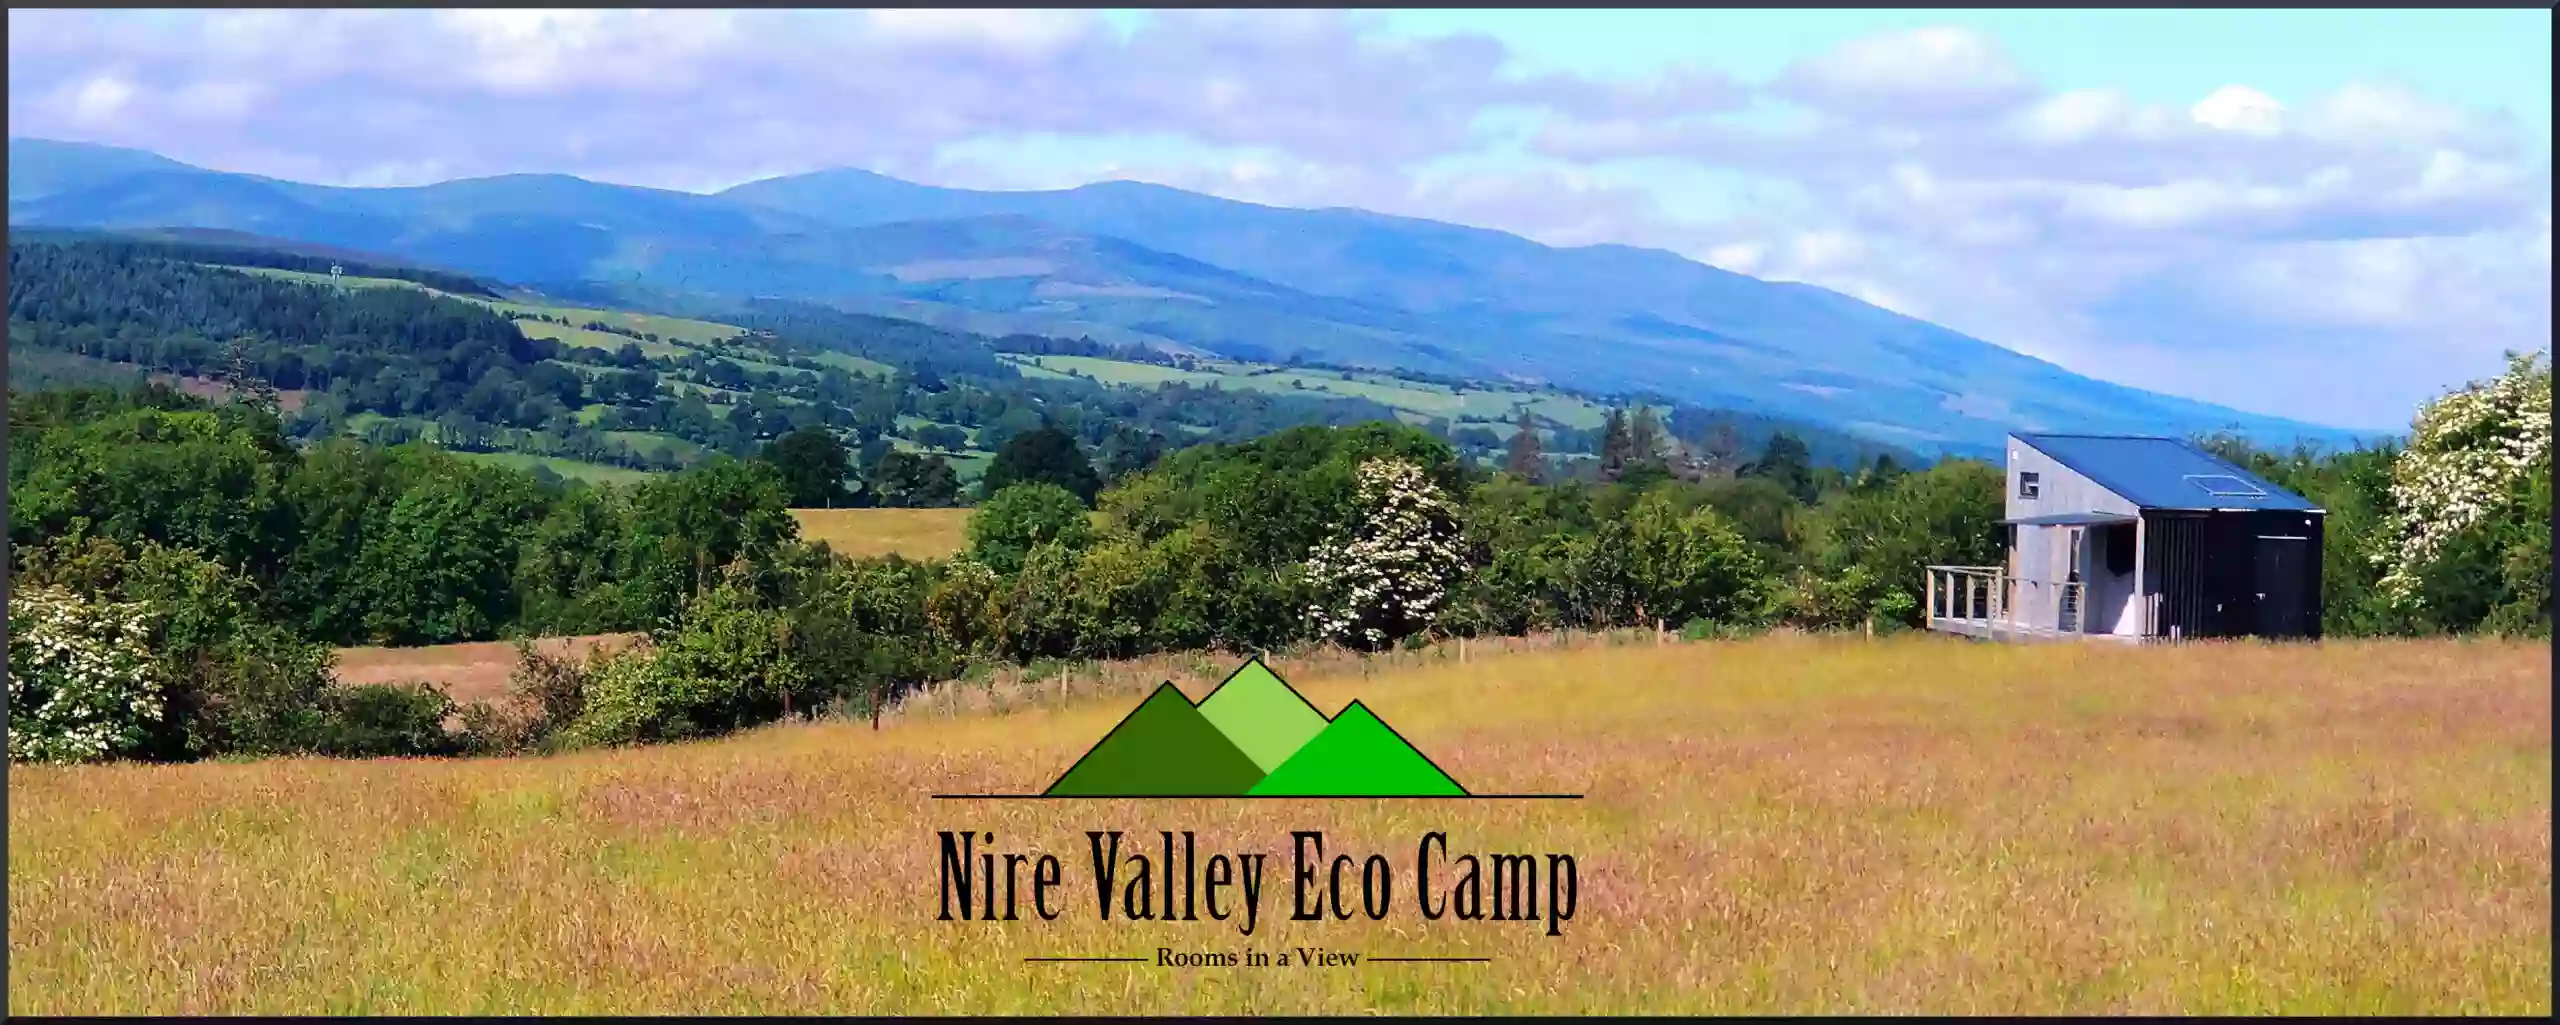 Nire Valley Eco Camp